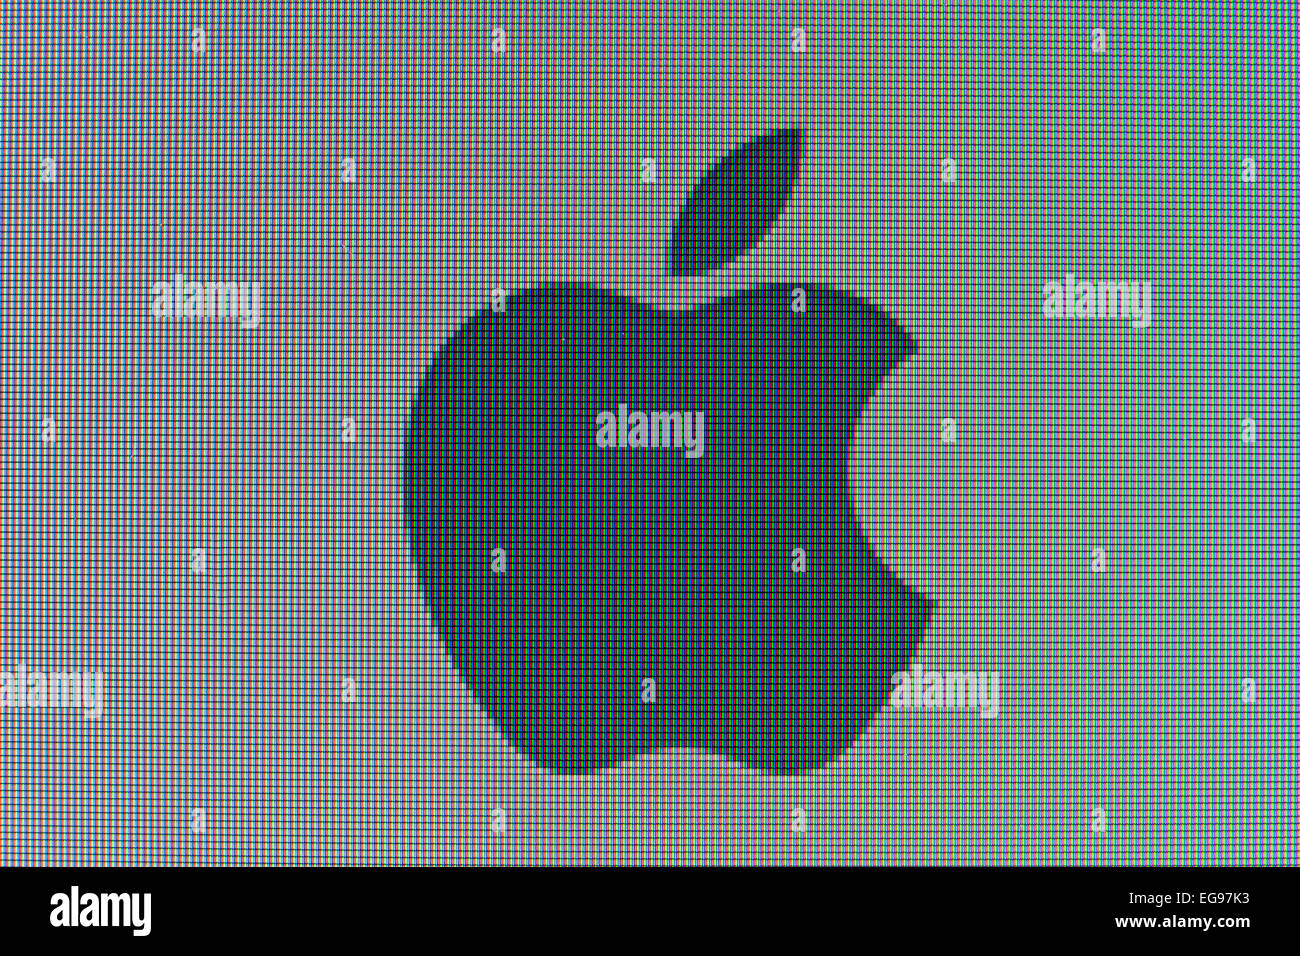 Closeup of Apple logo on LCD computer screen Stock Photo